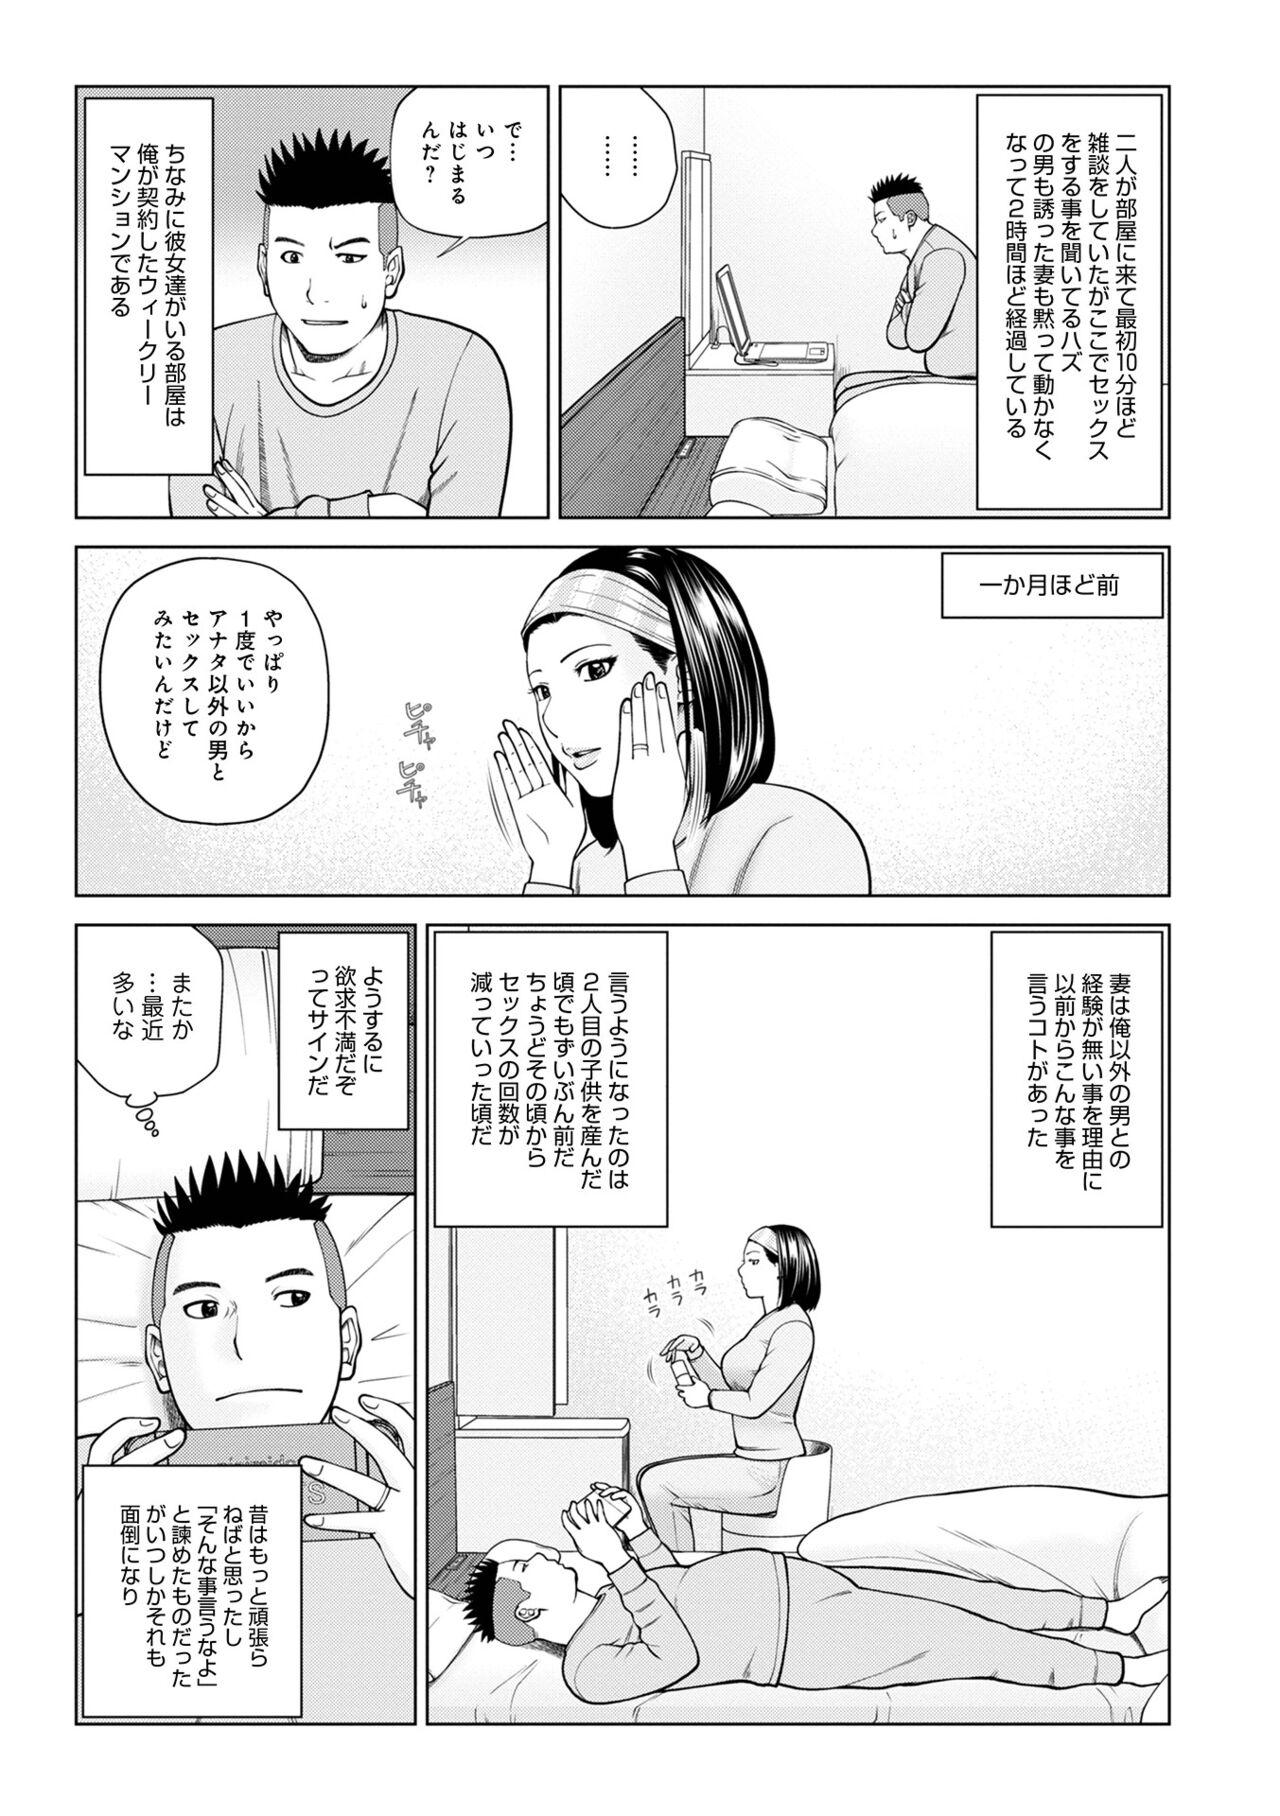 WEB Ban COMIC Gekiyaba! Vol. 155 4